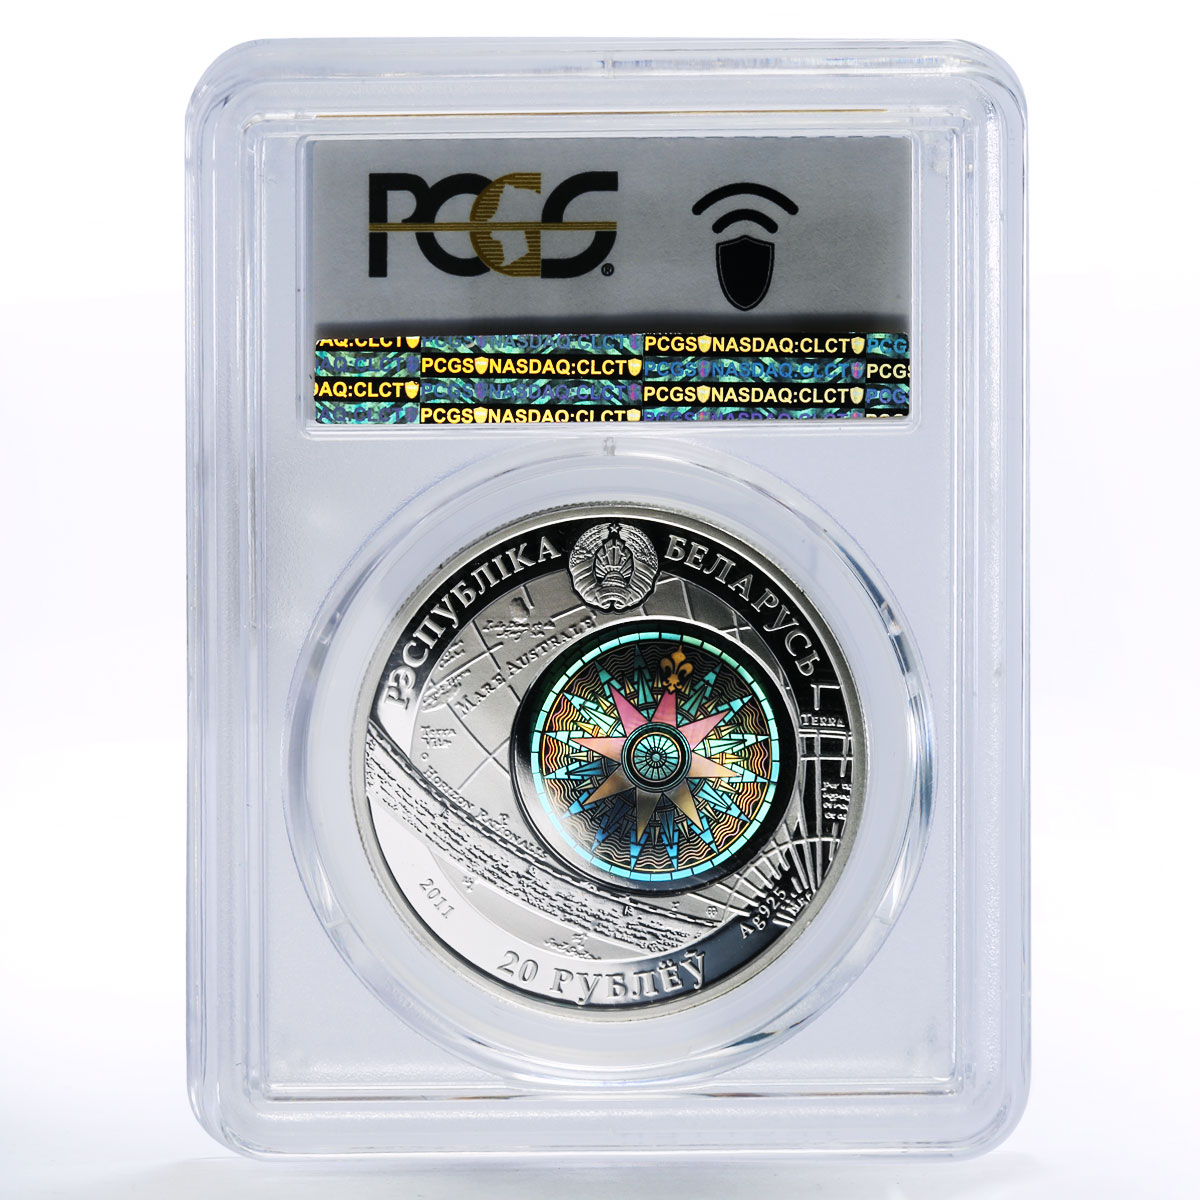 Belarus 20 rubles Sailing Ships Kruzenstern PR69 PCGS hologram silver coin 2011